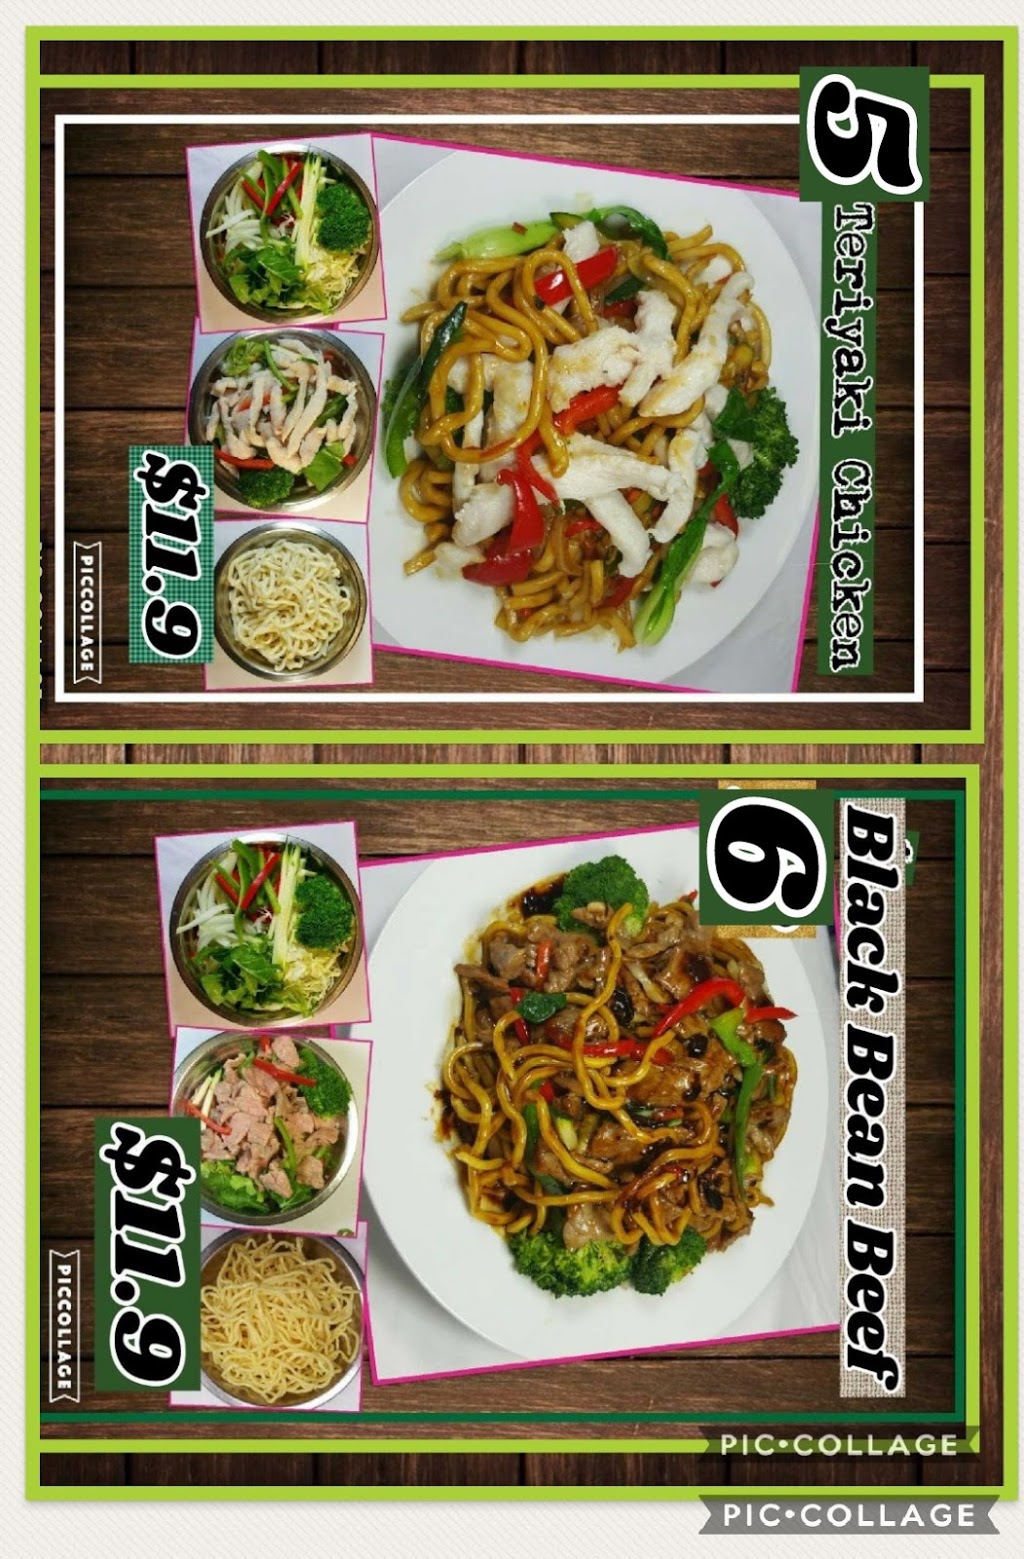 Master Noodle | restaurant | 10/359 Gympie Rd, Kedron QLD 4031, Australia | 0733598122 OR +61 7 3359 8122